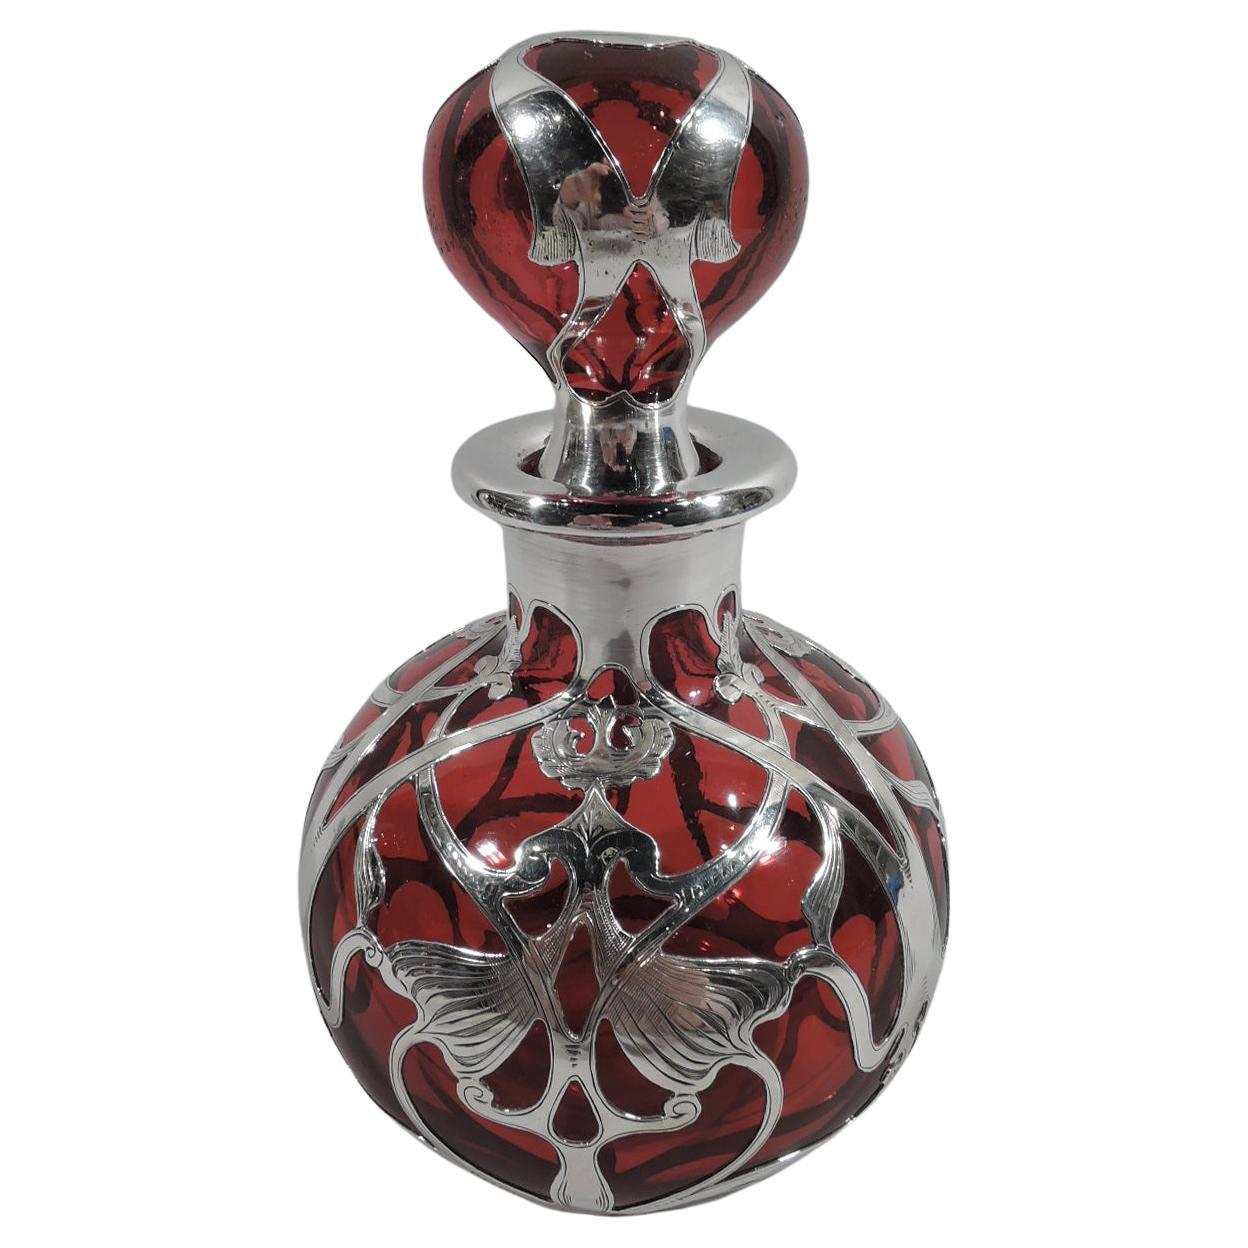 Large Gorham Art Nouveau Red Silver Overlay Cologne Bottle